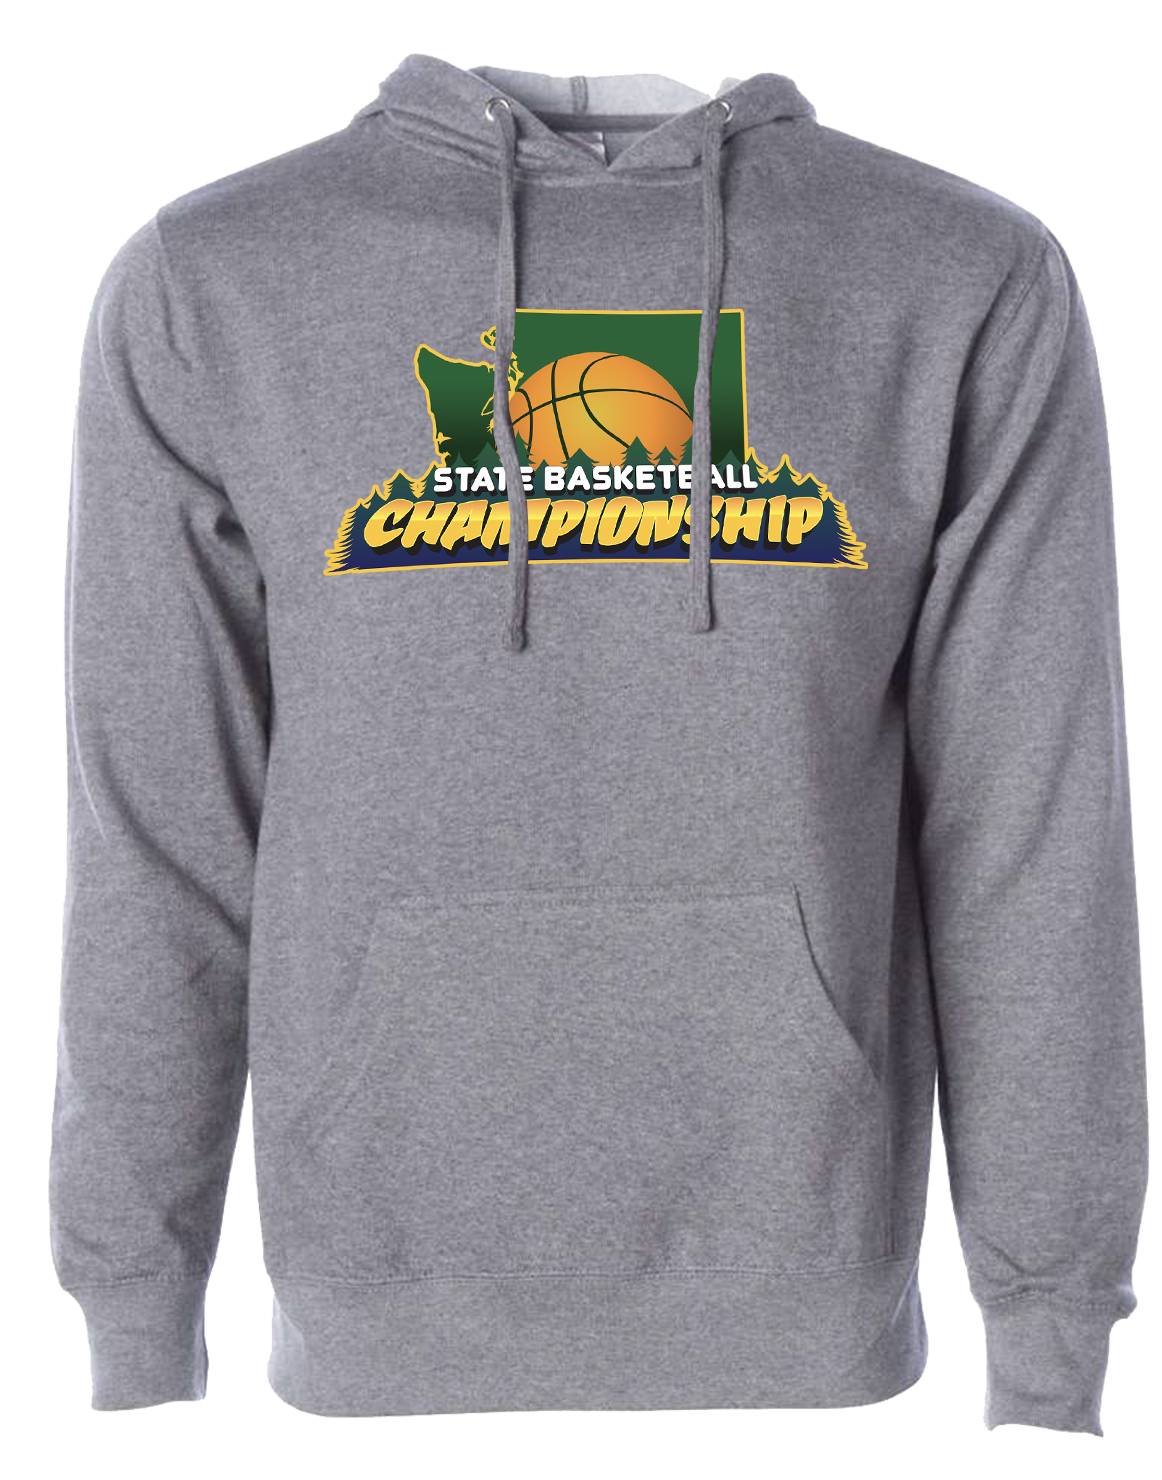 Grey Washington State Basketball Sweatshirt